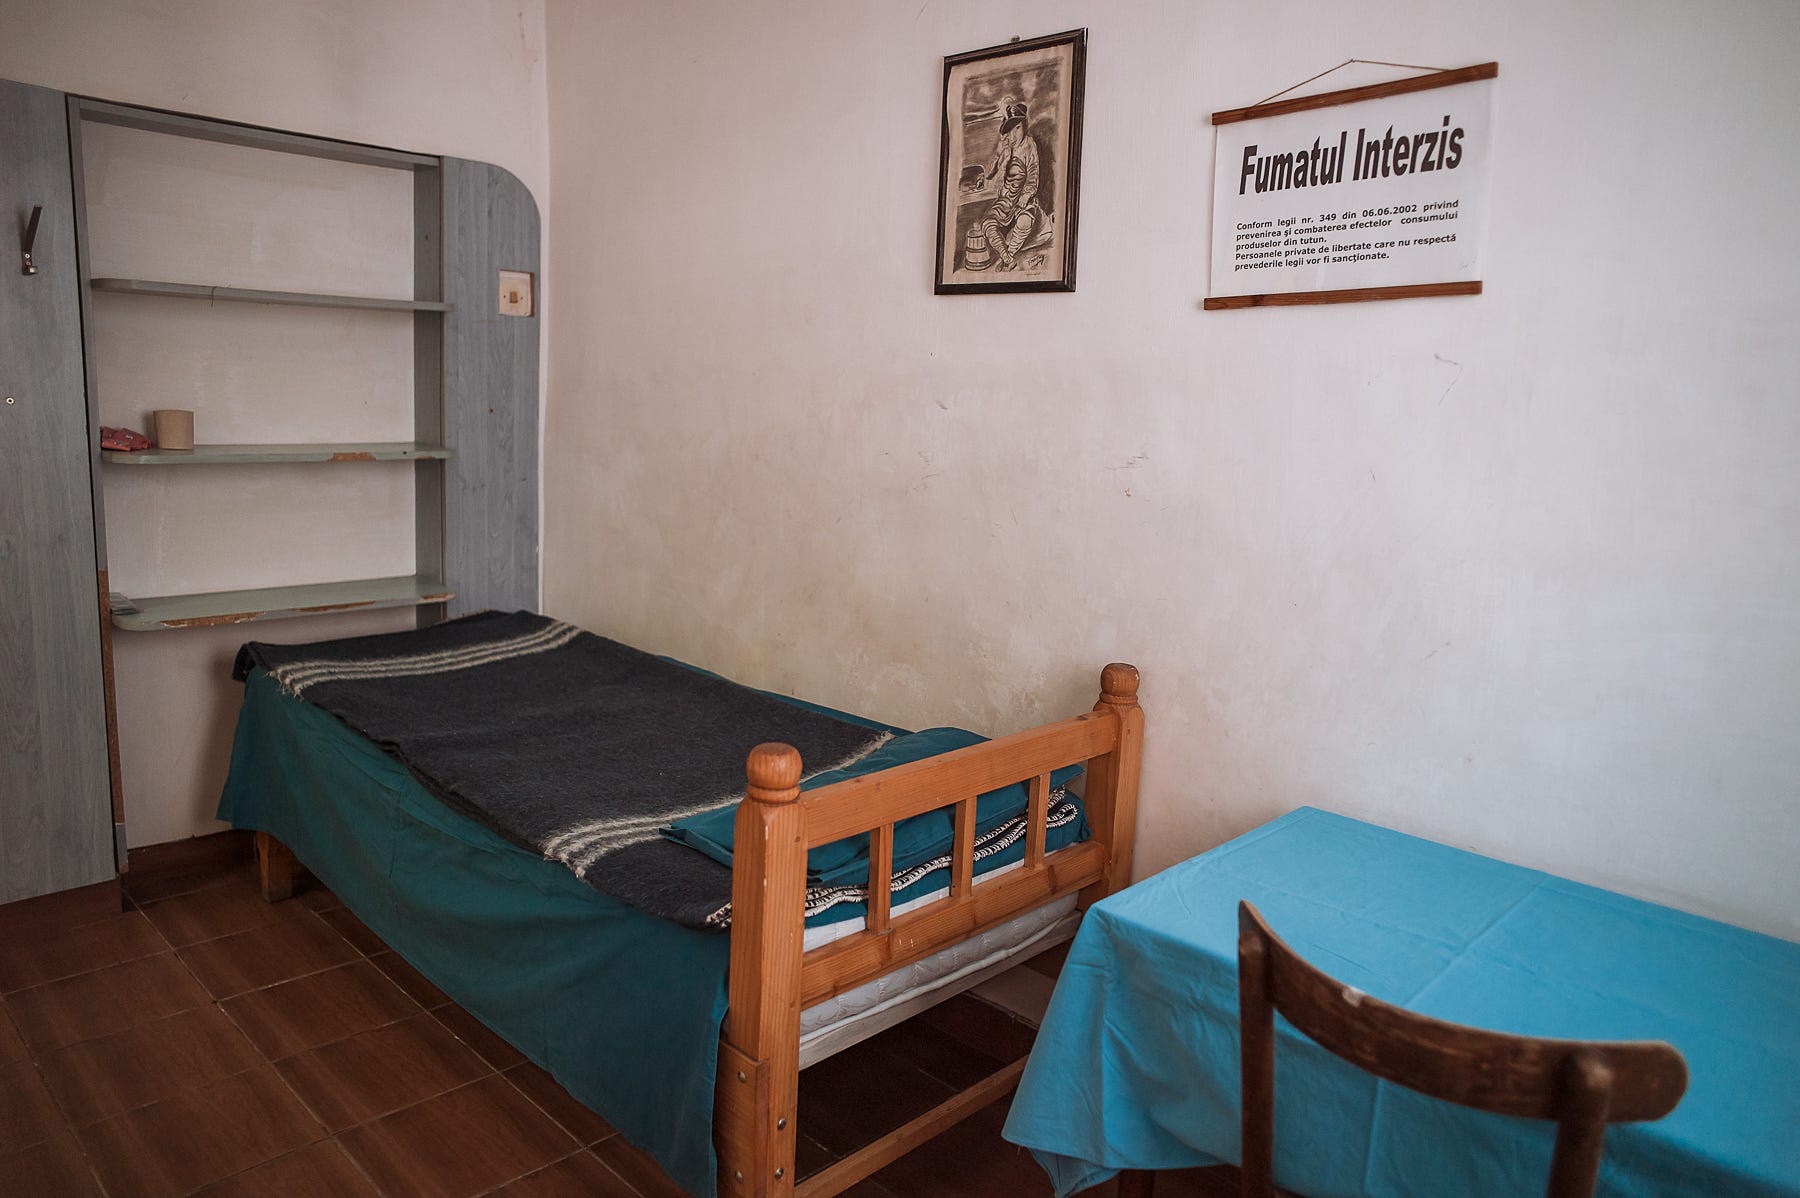 prison conjugal visit room